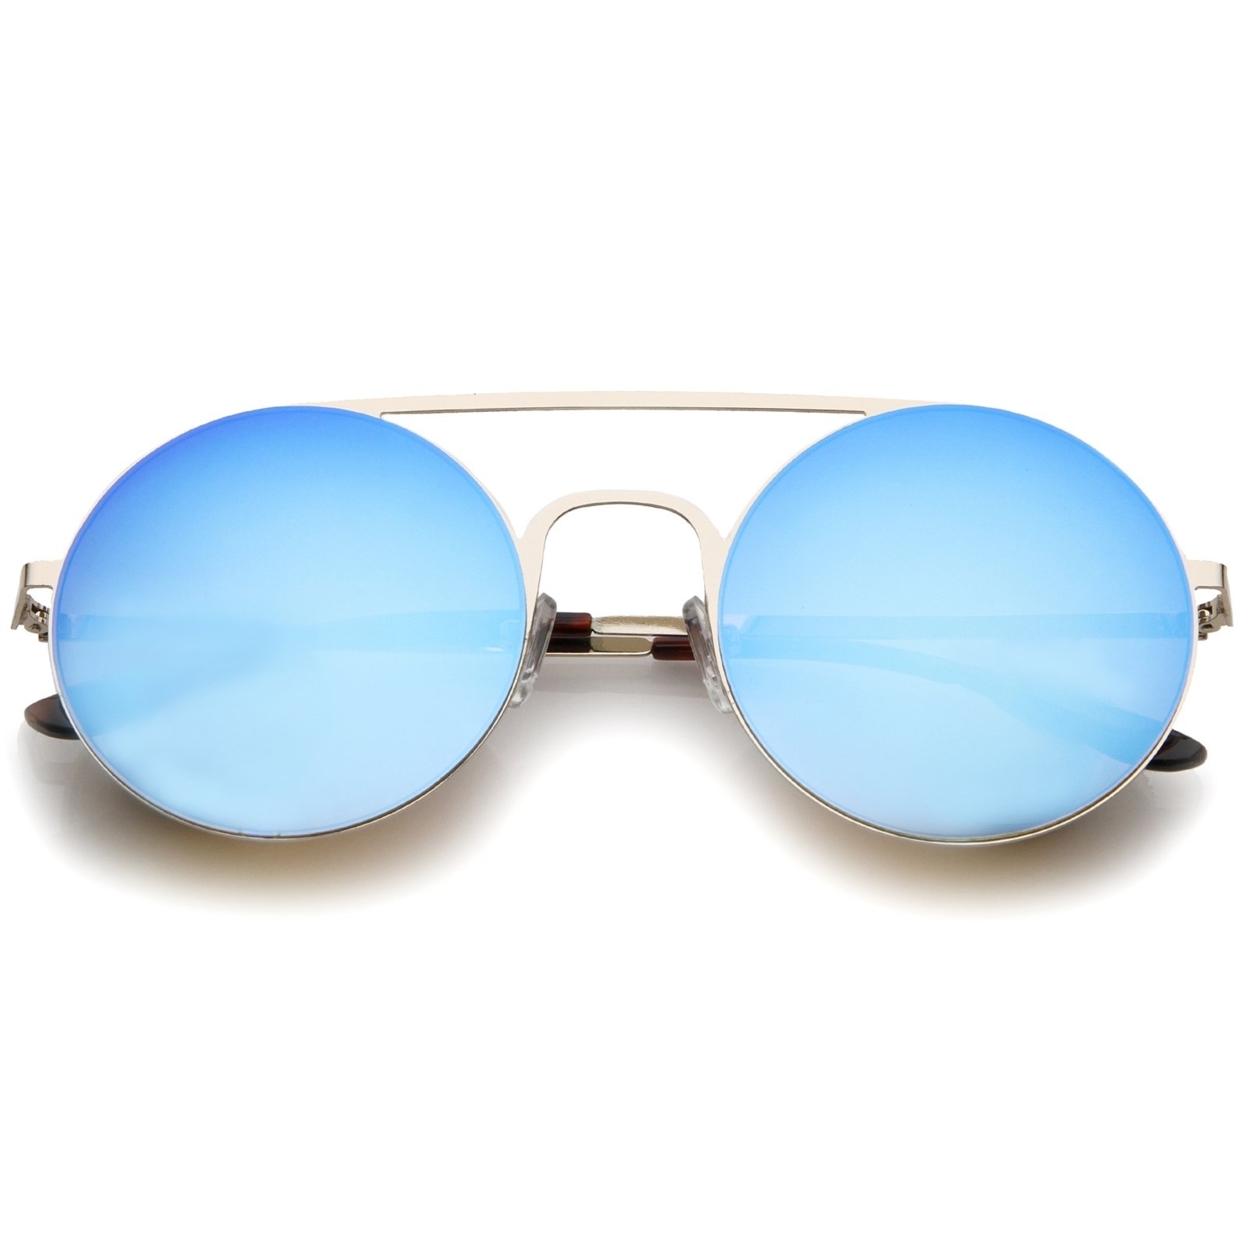 Modern Slim Double Nose Bridge Colored Mirror Flat Lens Round Sunglasses 53mm - Gold / Magenta-Green Mirror